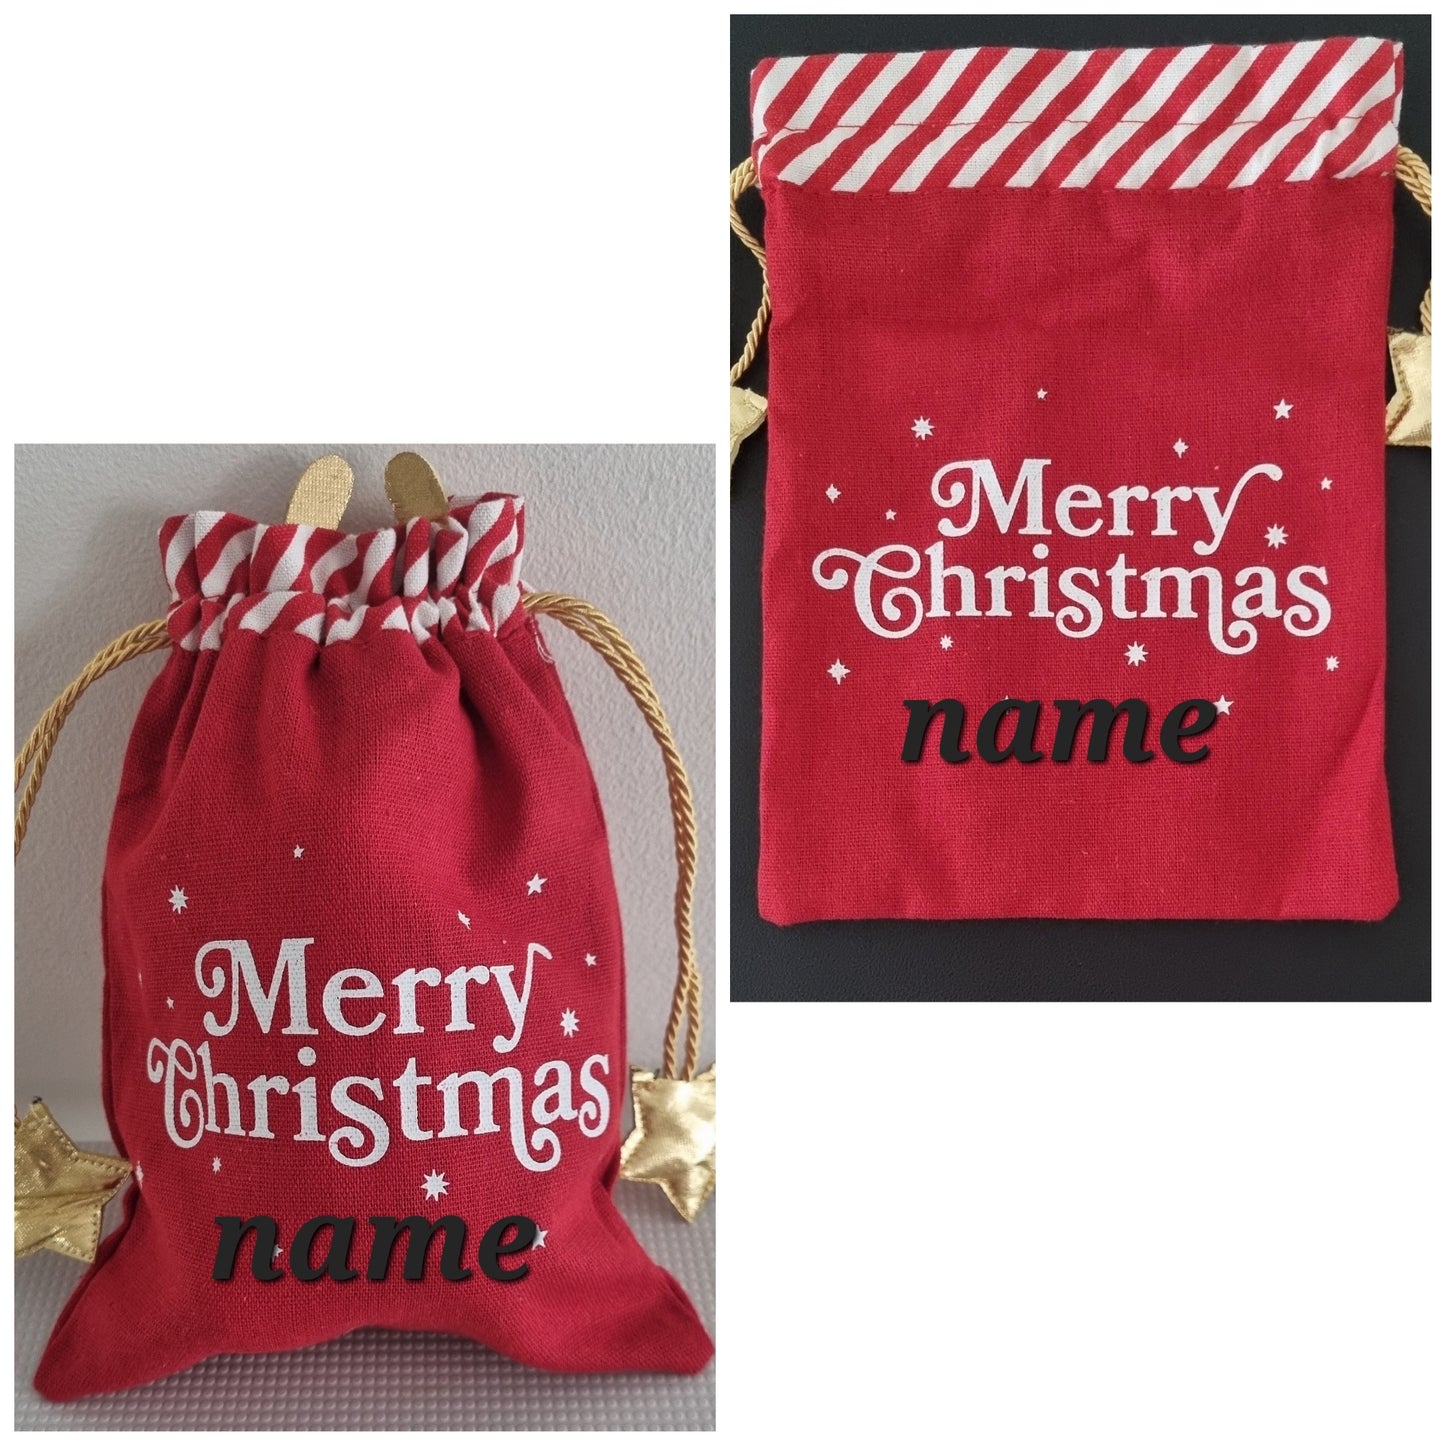 Personalised reindeer with gift bag set